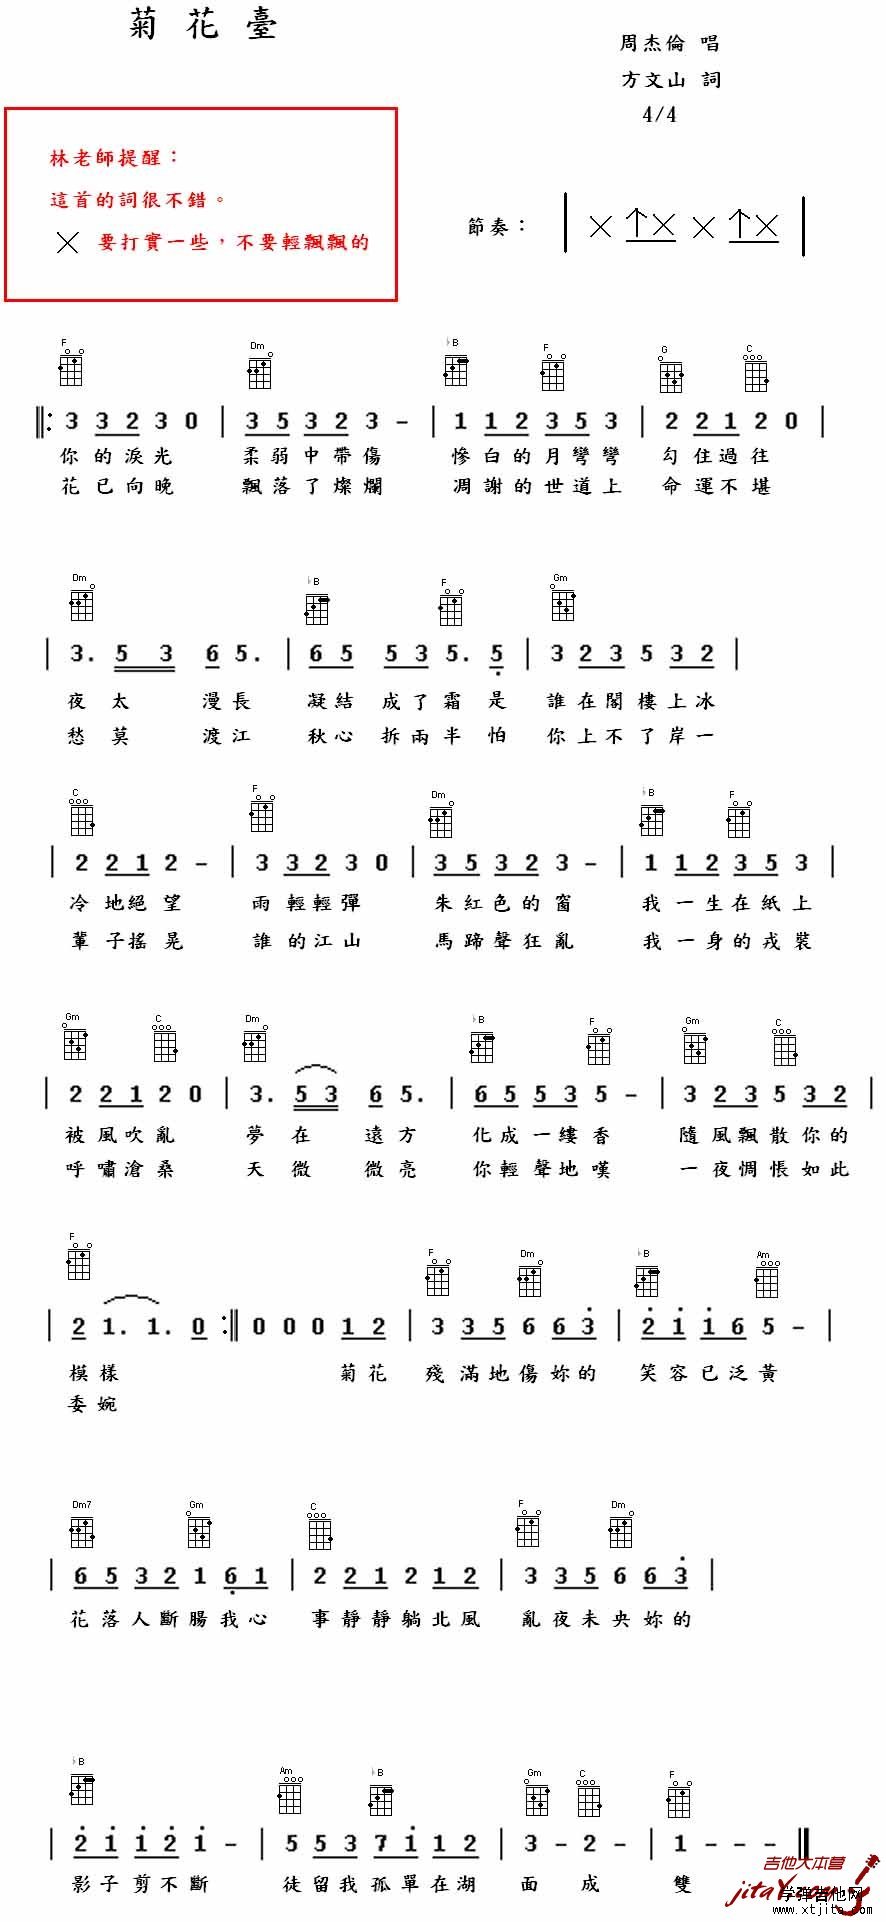 菊花台ukulele谱